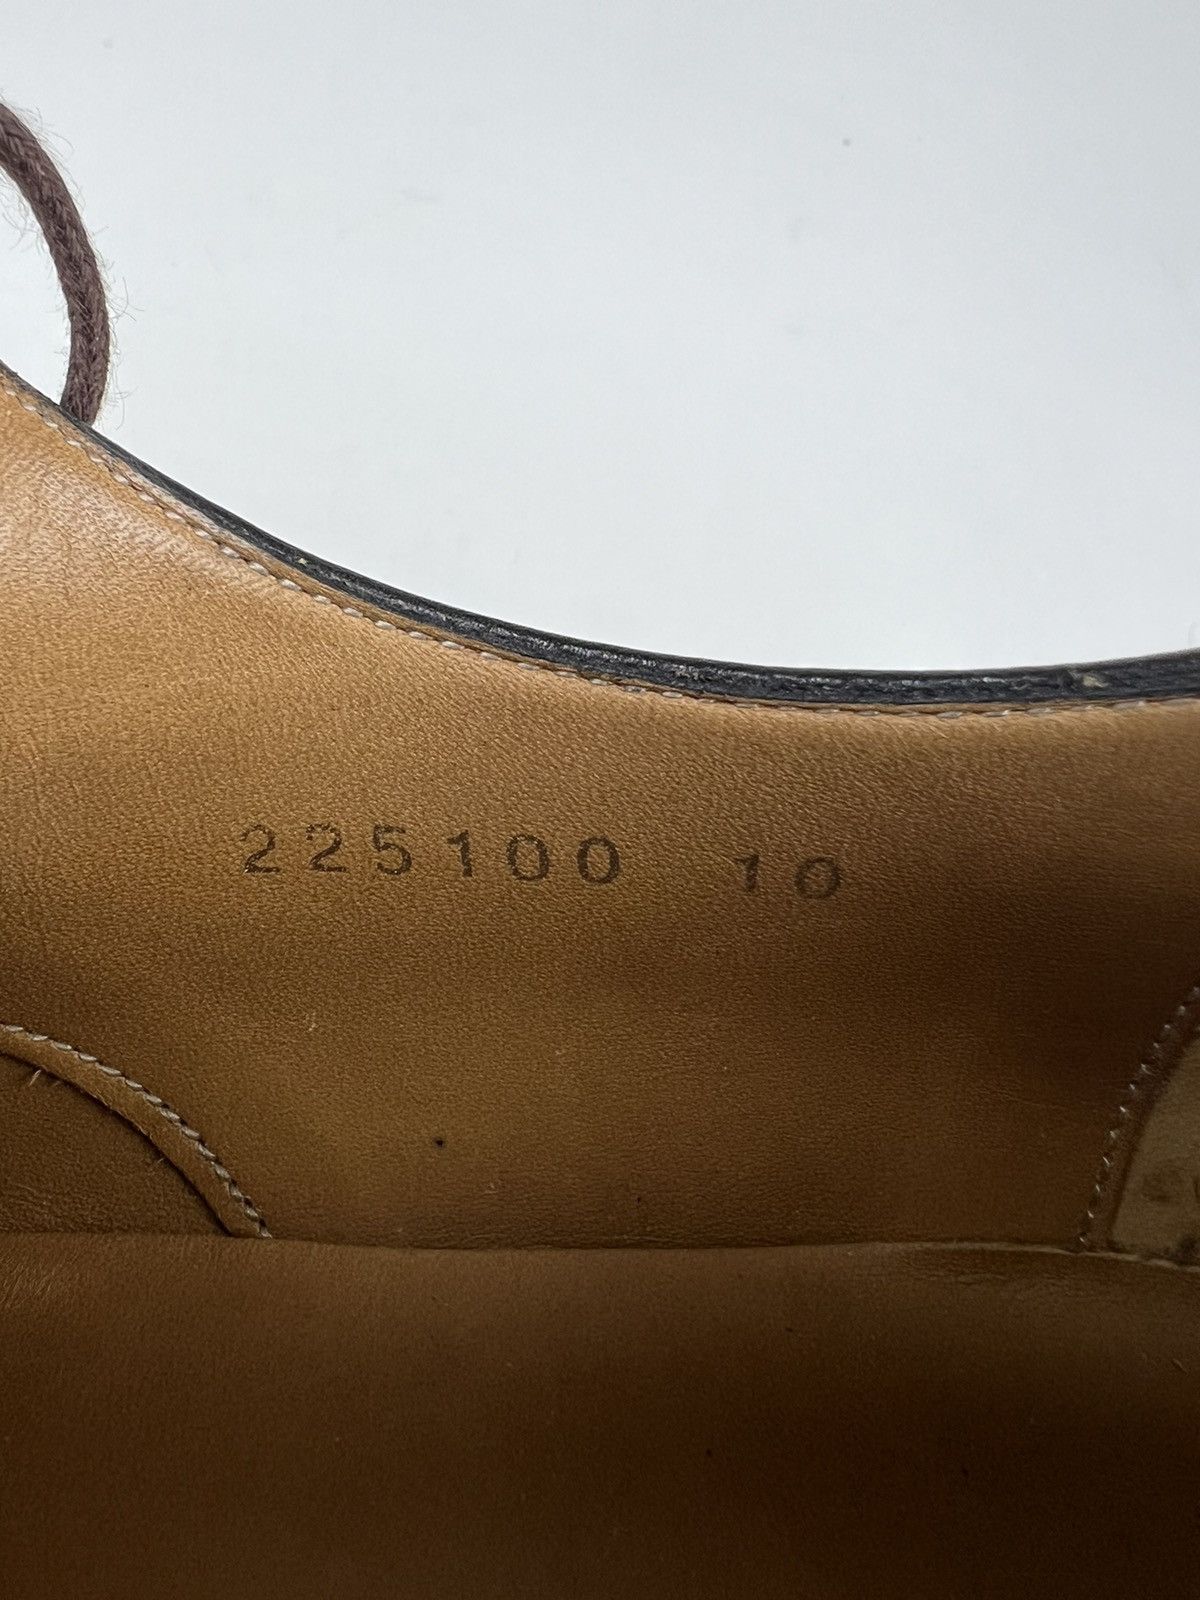 Gucci Gucci Logo Lace Up Leather Shoes Derby Size US 11.5 / EU 44-45 - 18 Thumbnail